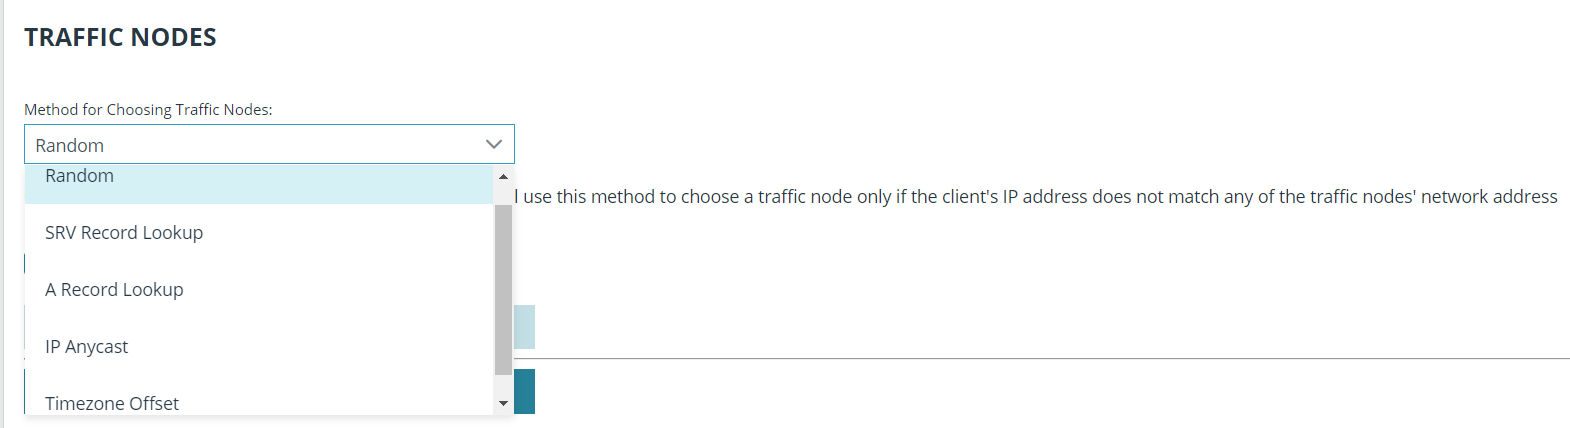 Atlas Cluster Page Traffic Nodes Method Selection